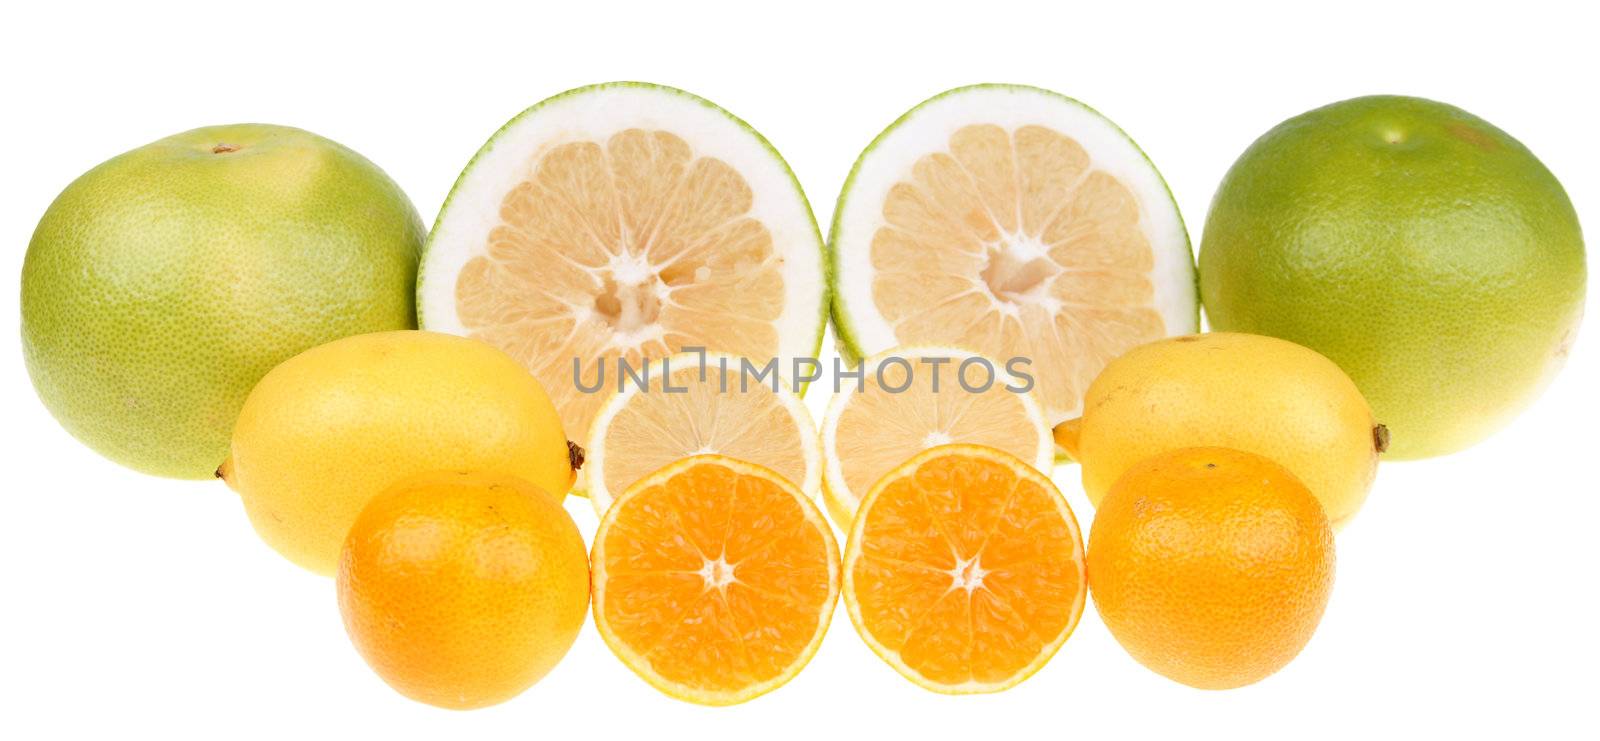  Big green grapefruits,lemon and mandarines close-up on white background